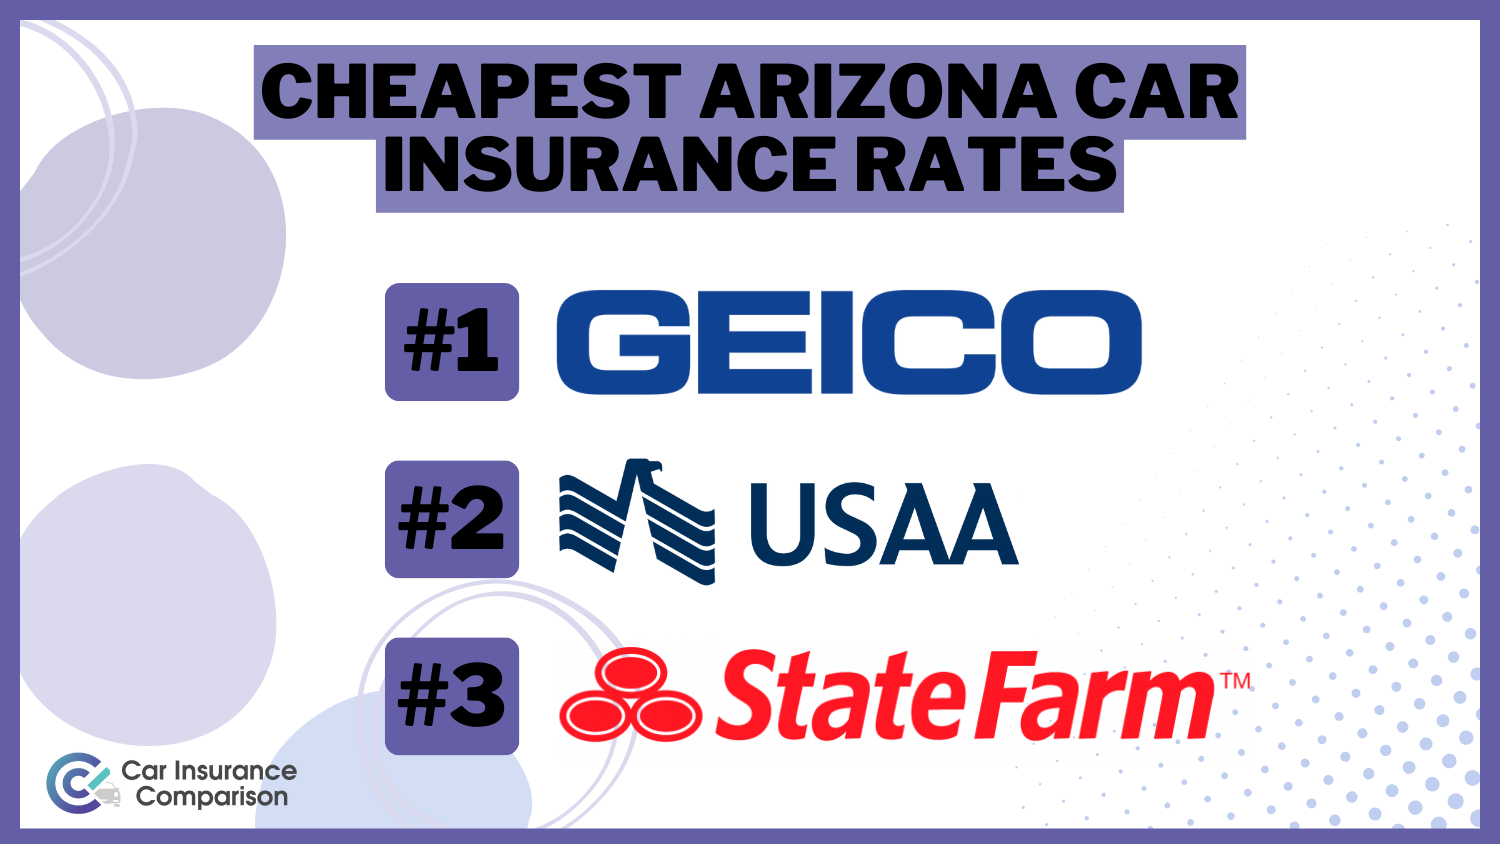 Geico, USAA, and State Farm: Cheapest Arizona Car Insurance Rates